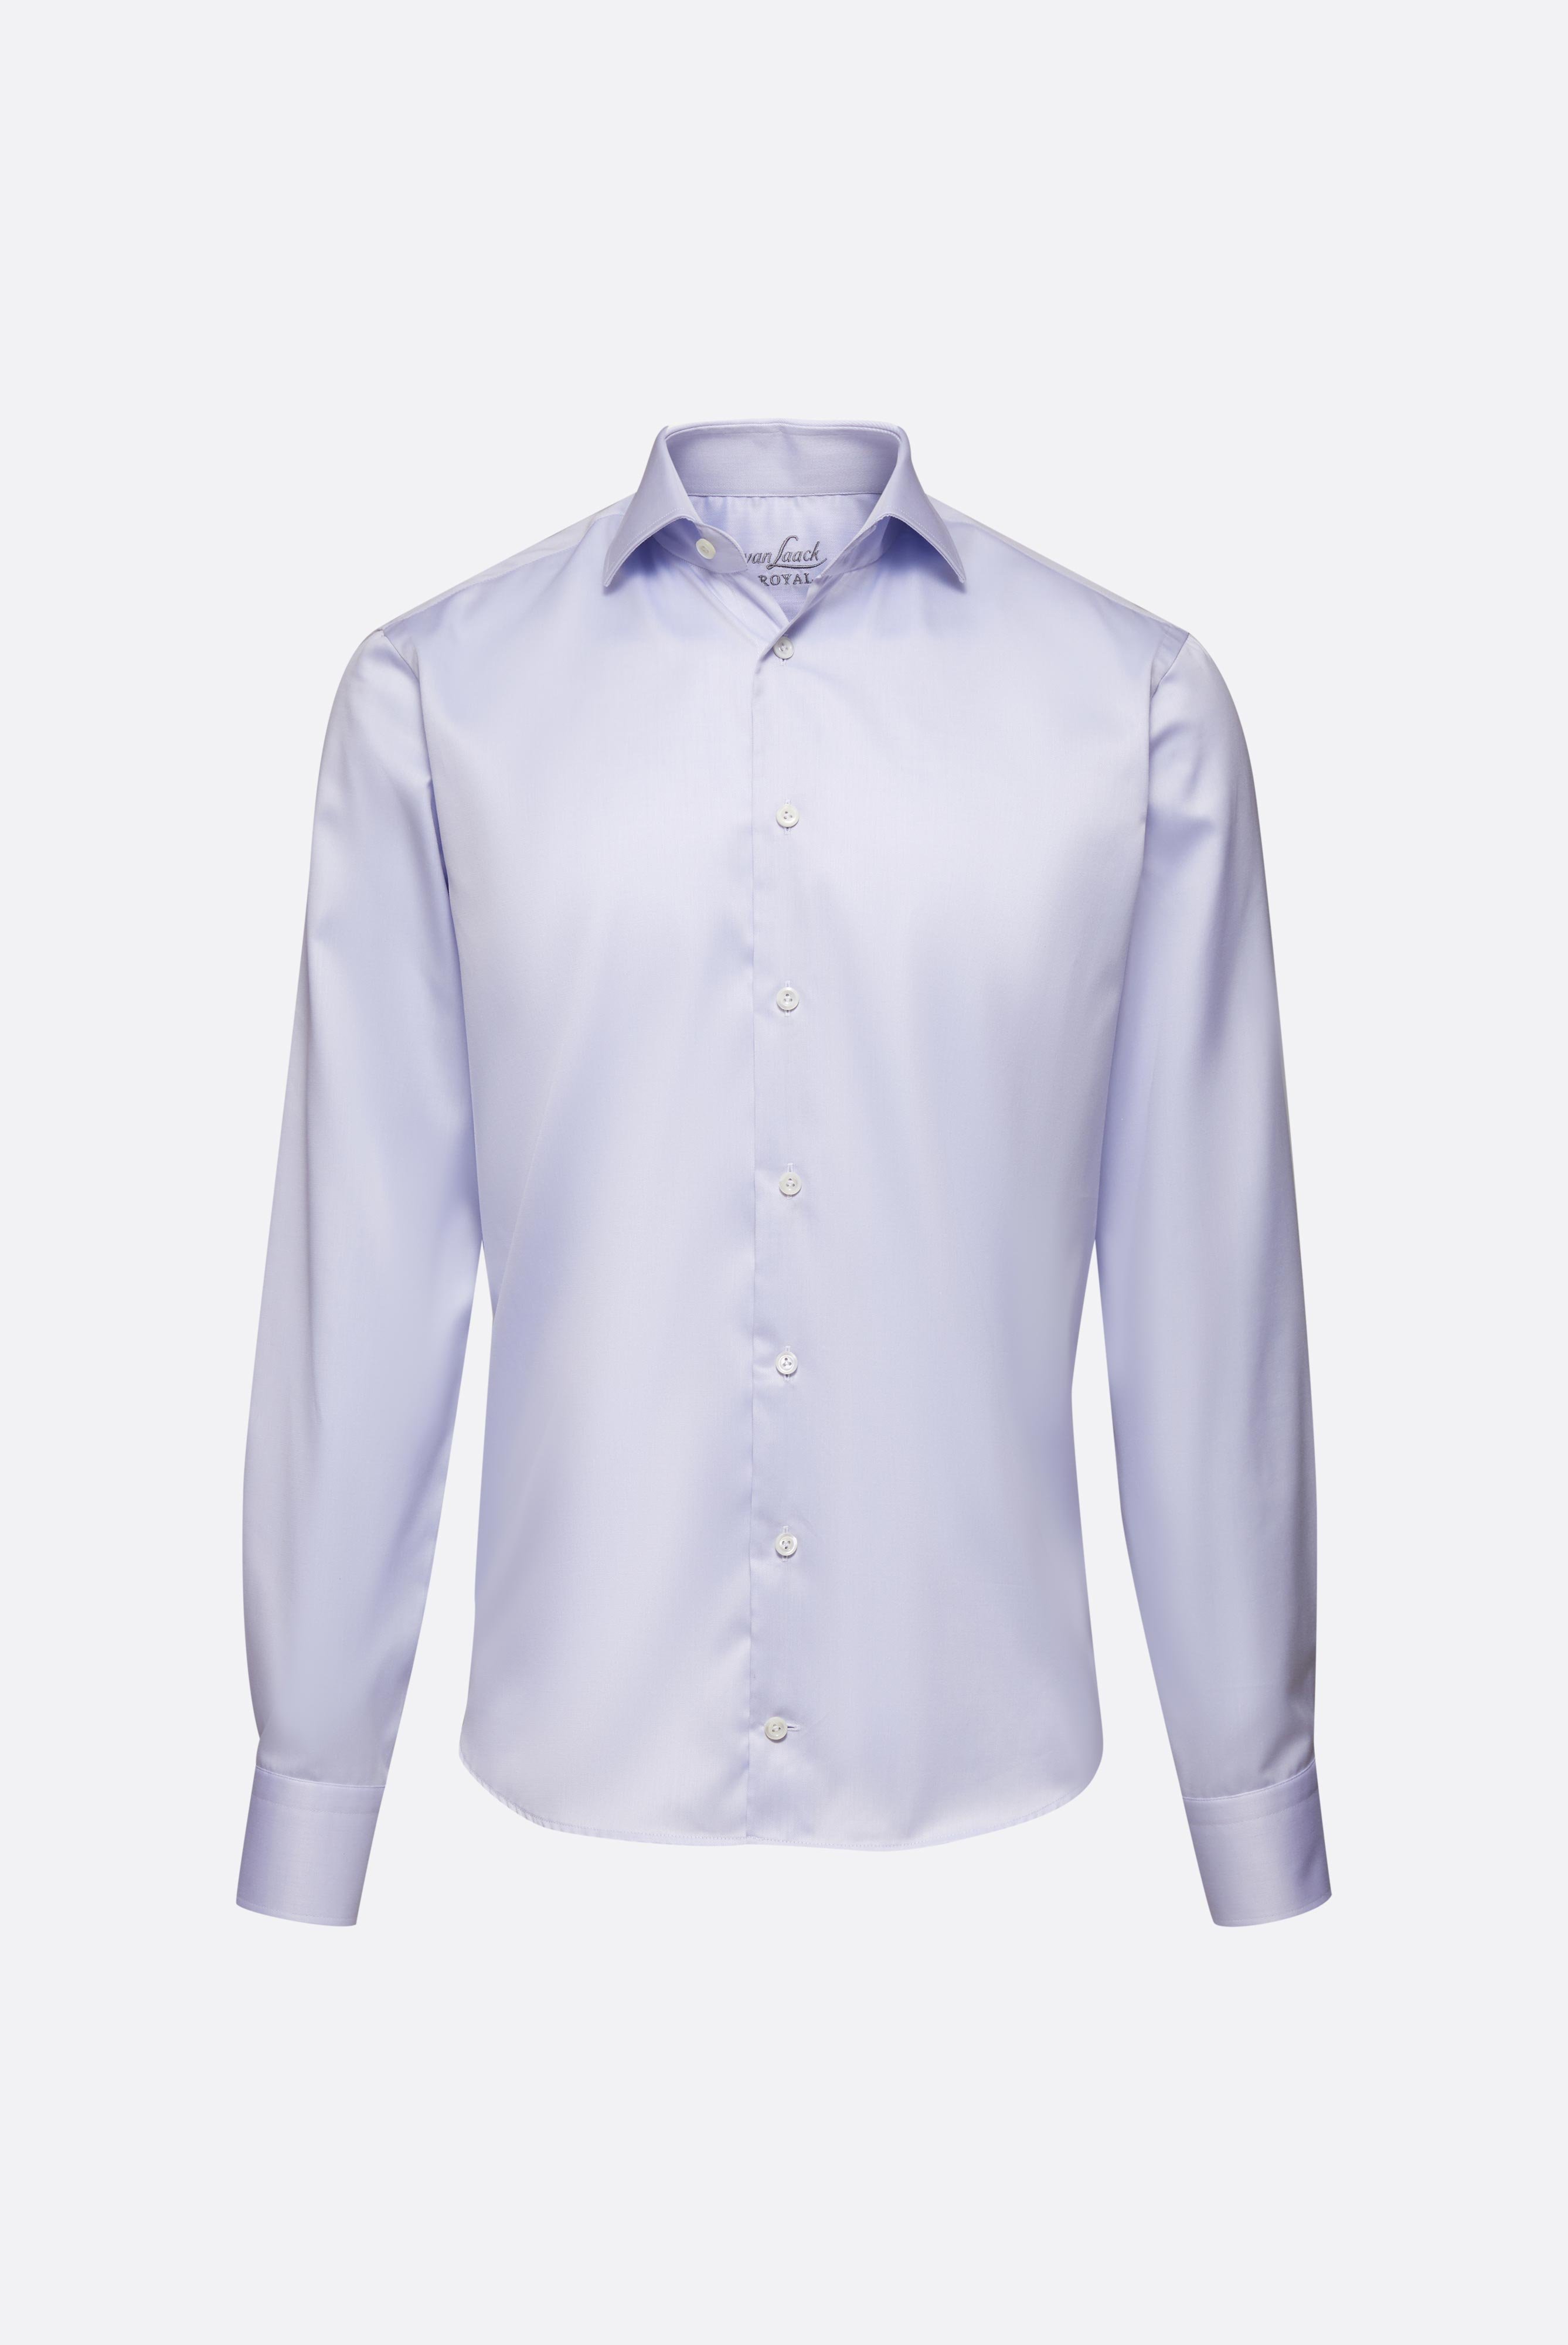 Bügelleichte Hemden+Bügelfreies Twill Hemd Tailor Fit+35.3012.BN.133342.726.38